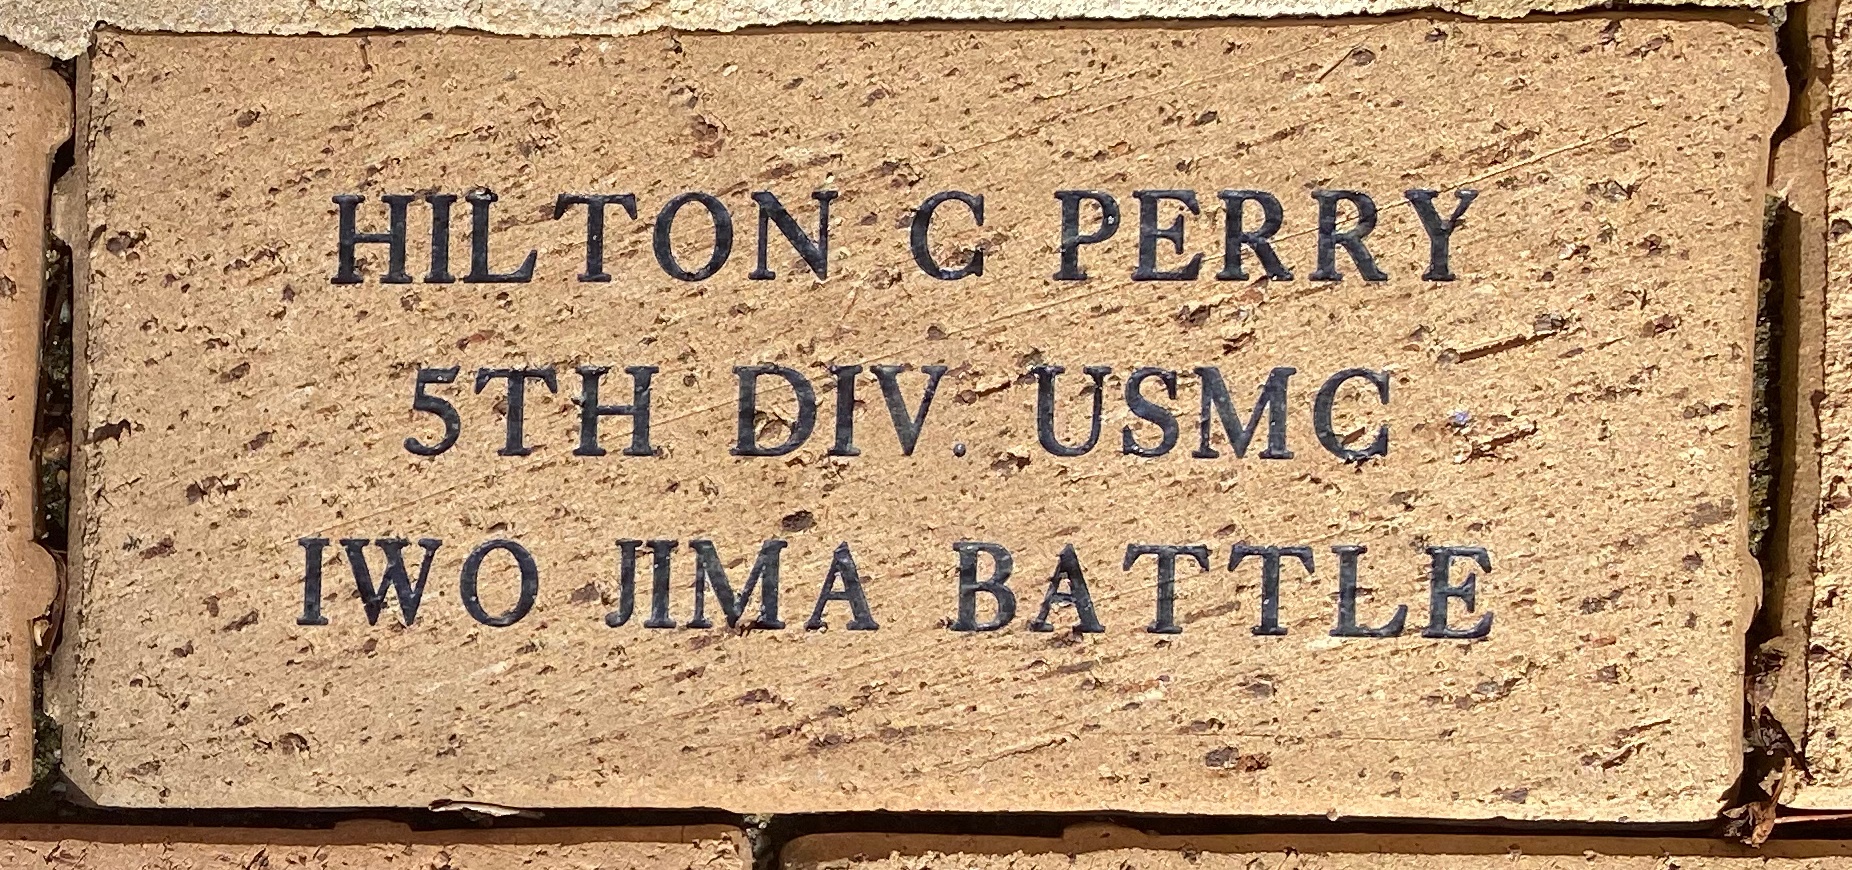 HILTON C PERRY 5TH DIV USMC IWO JIMA BATTLE